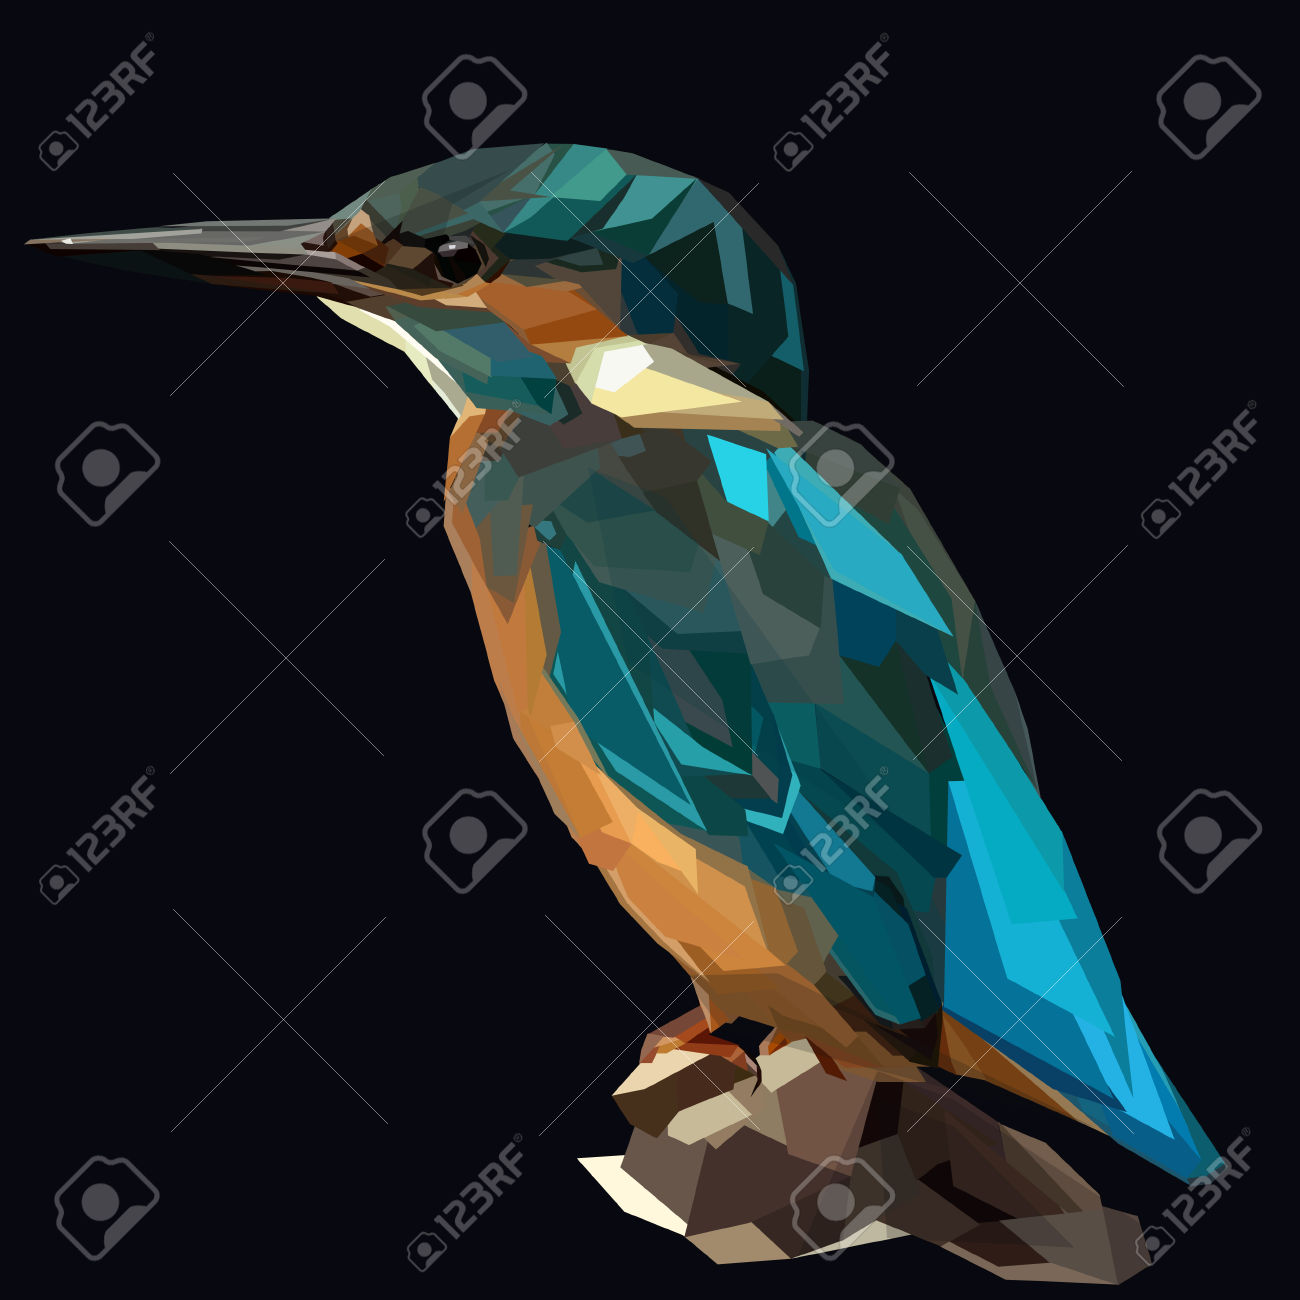 Small Blue Kingfisher Bird On Dark Background Royalty Free.